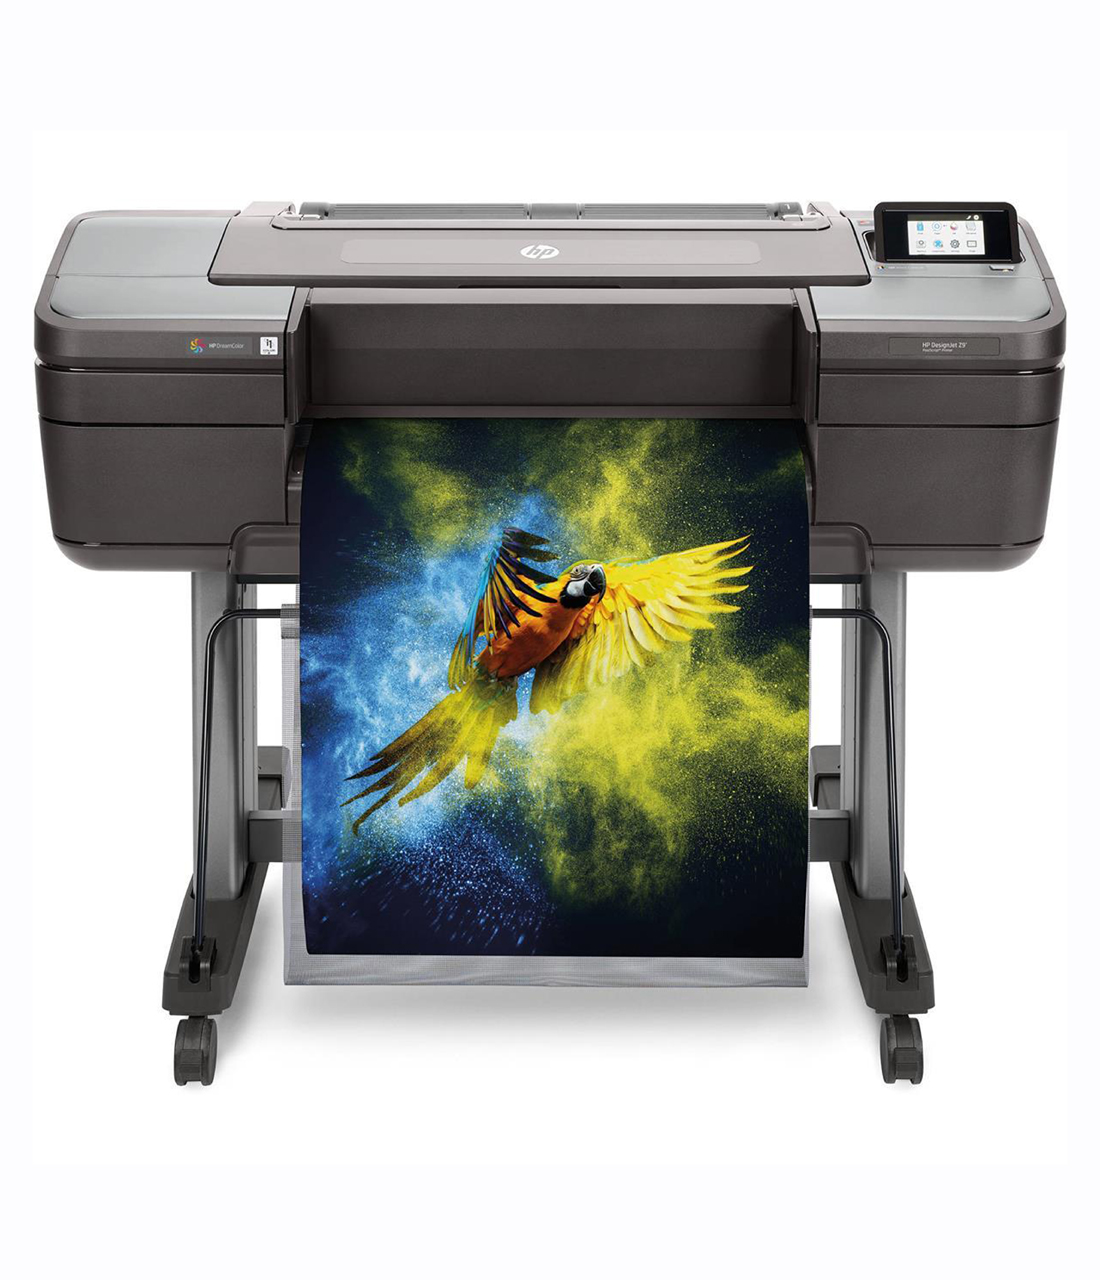 HP Z9 designjet printer